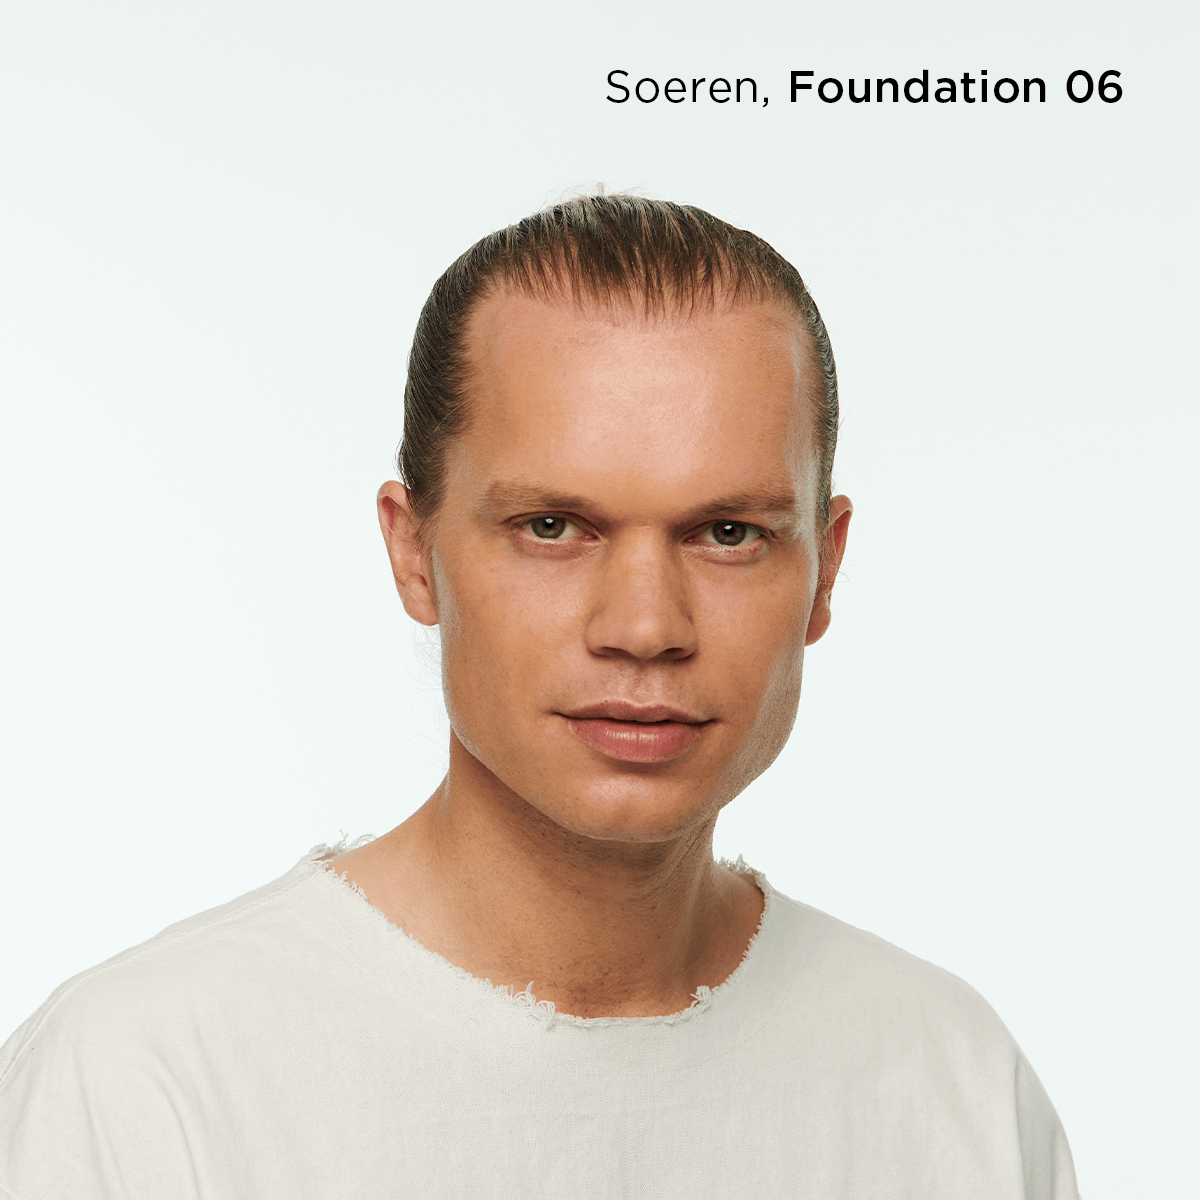 Foundation 06